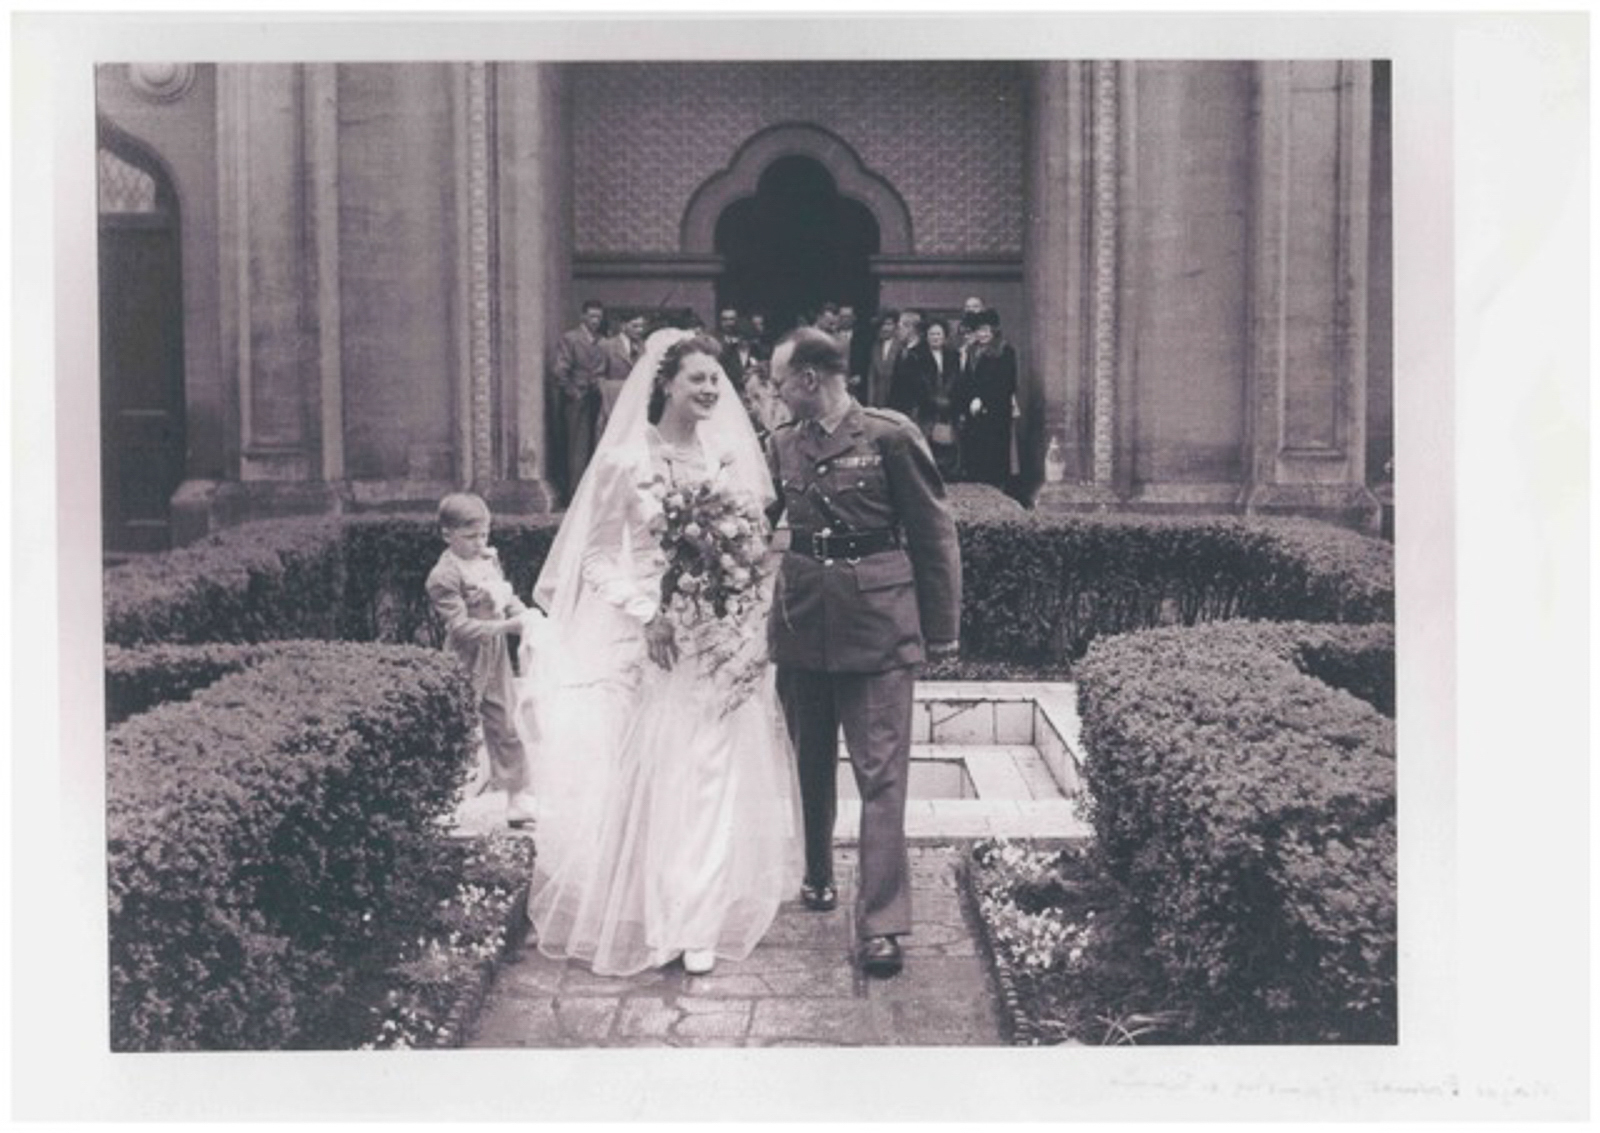 Major John Farmer and Ruby Sheppard  nikah at Shah Jahan Mosque UK / Everyday Muslim Archive